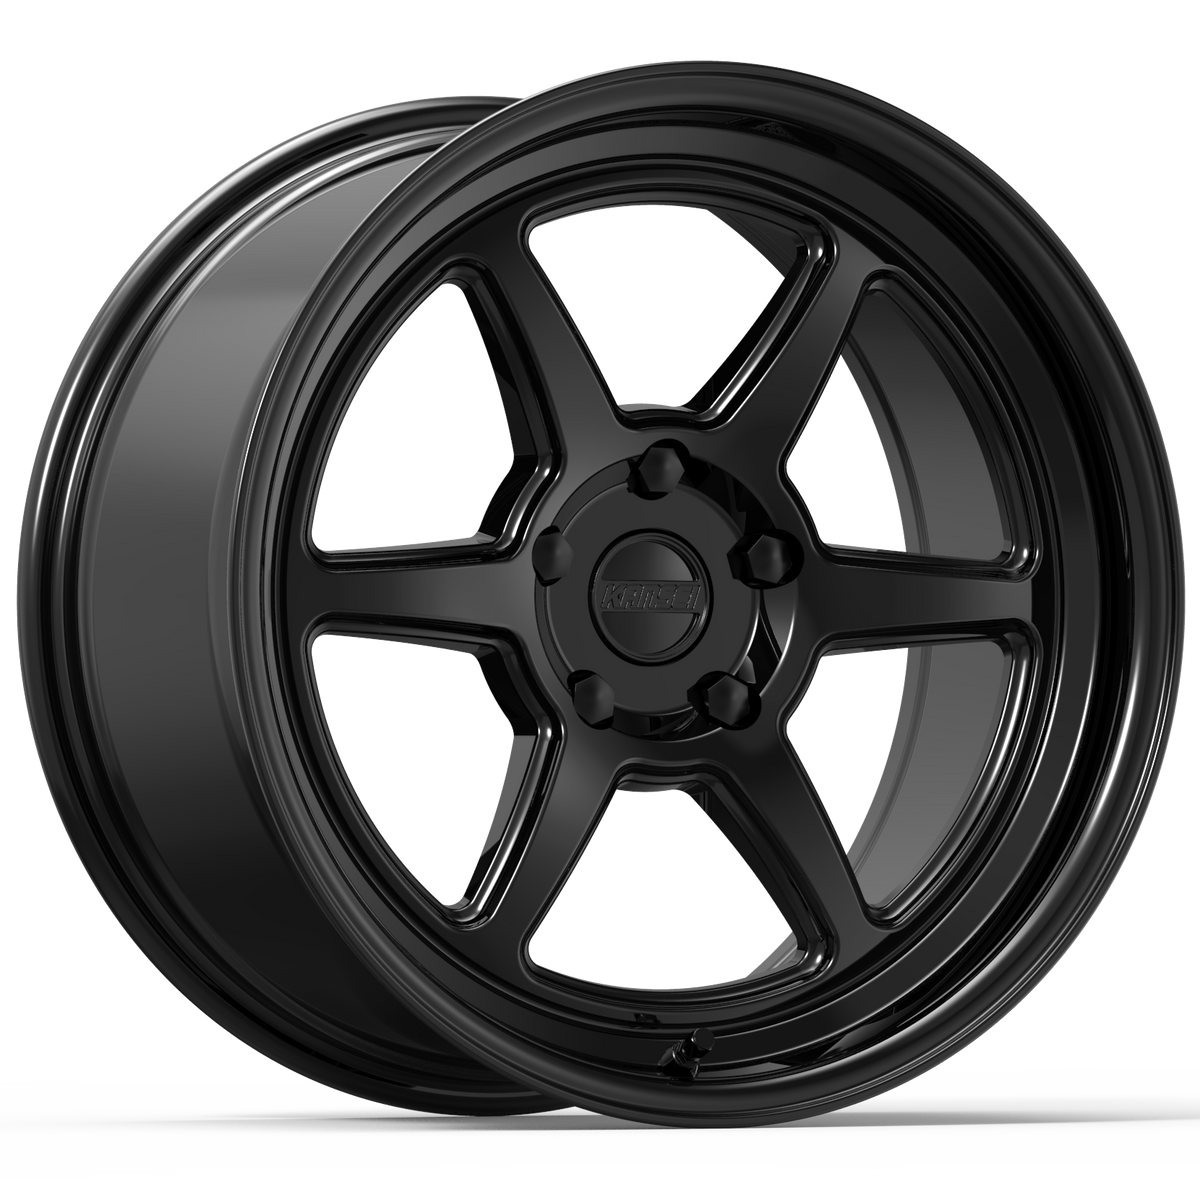 K14B ROKU Wheel, Size: 18" x 9.50", Bolt Pattern: 5 x 120 mm, Backspace: 6.75" [Finish: Gloss Black]